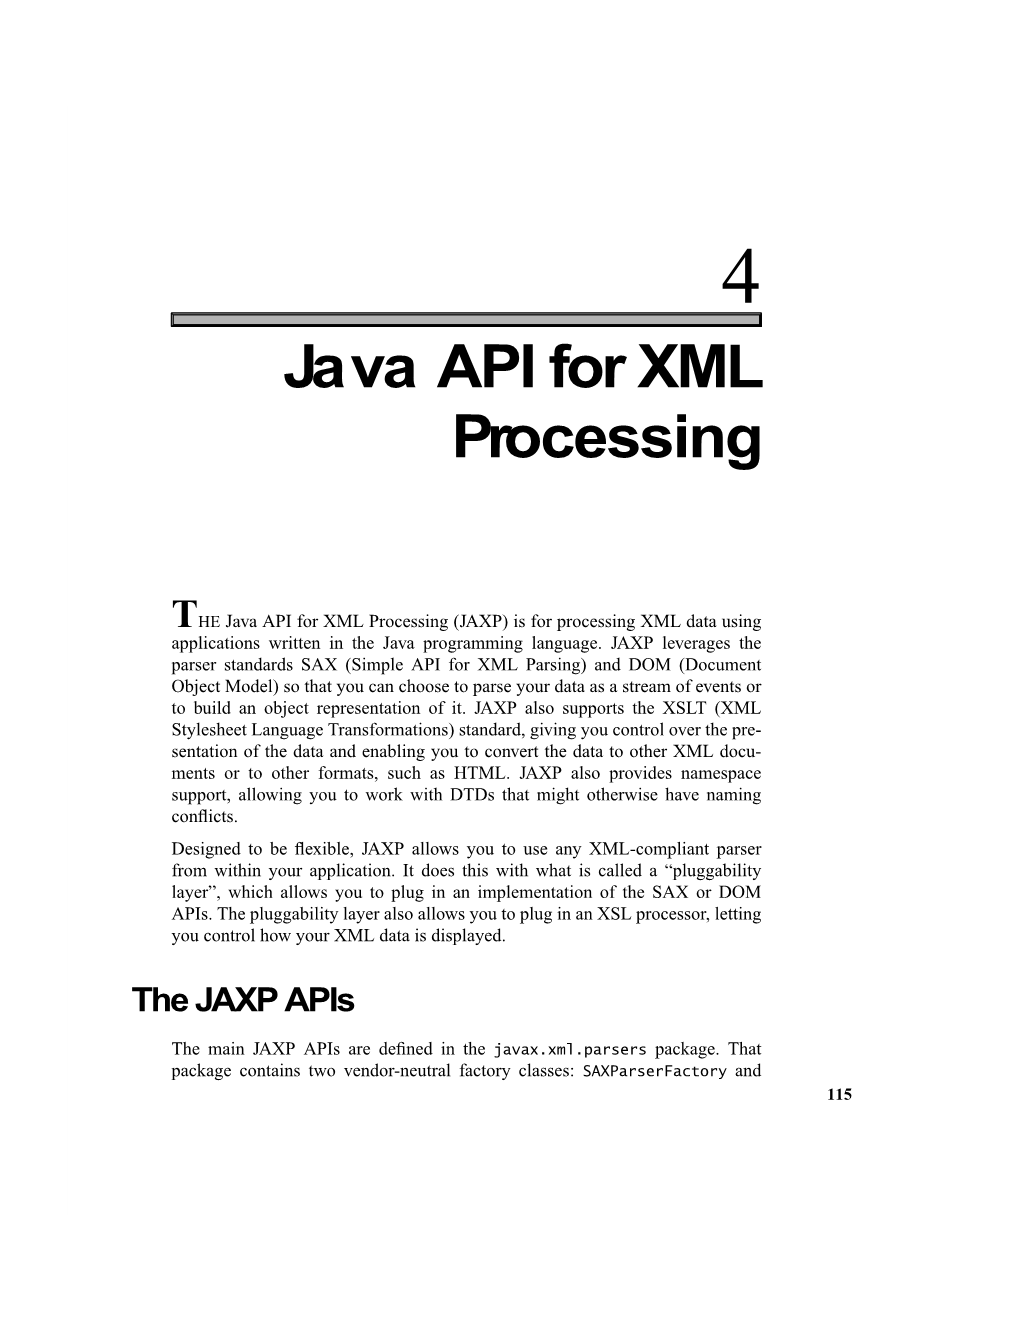 Java API for XML Processing